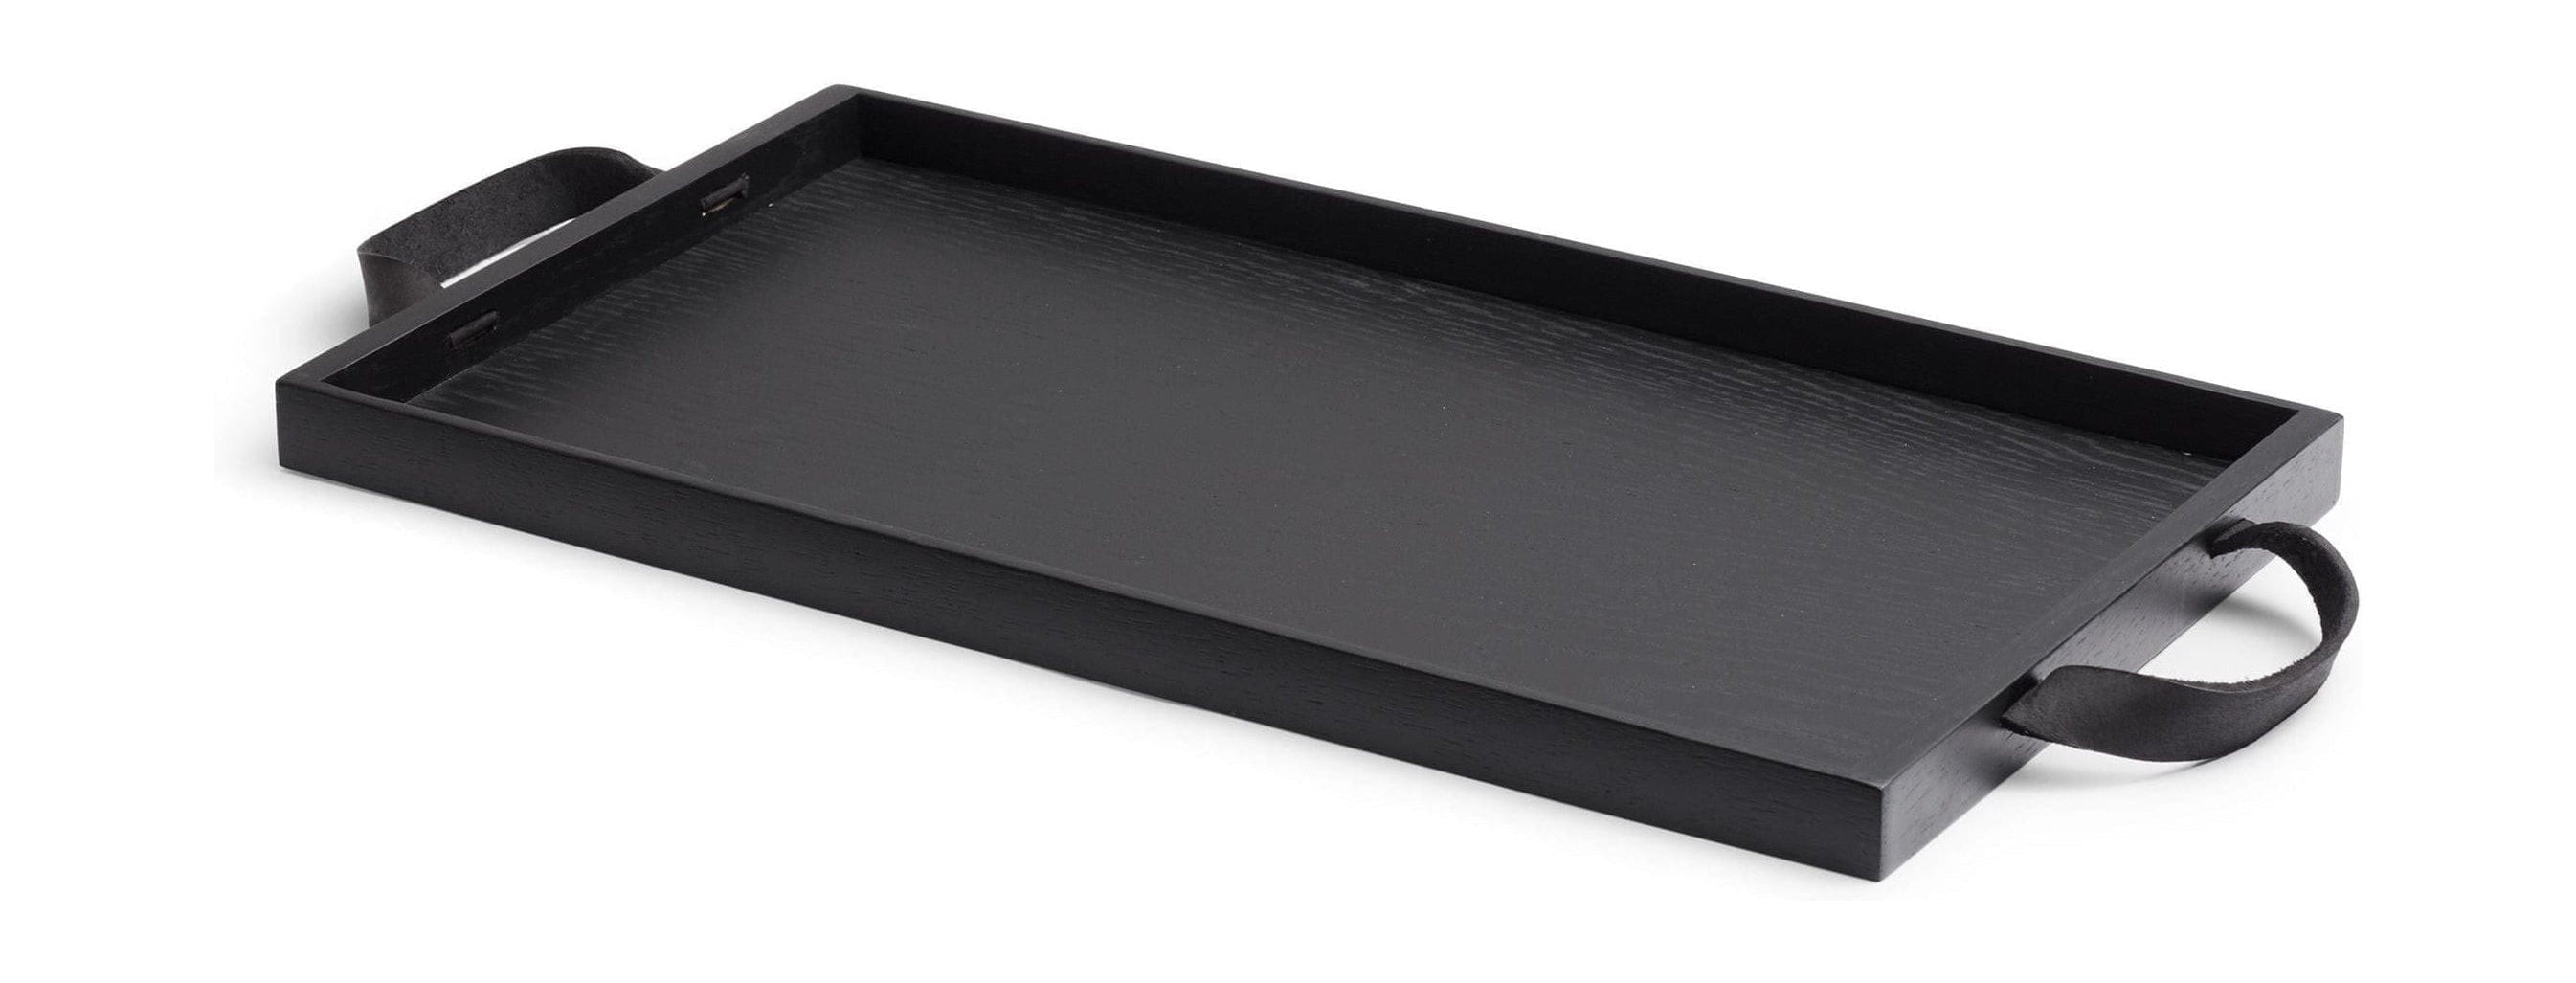 Skagerak Norr Bake 46x25,5 cm, svart/svart